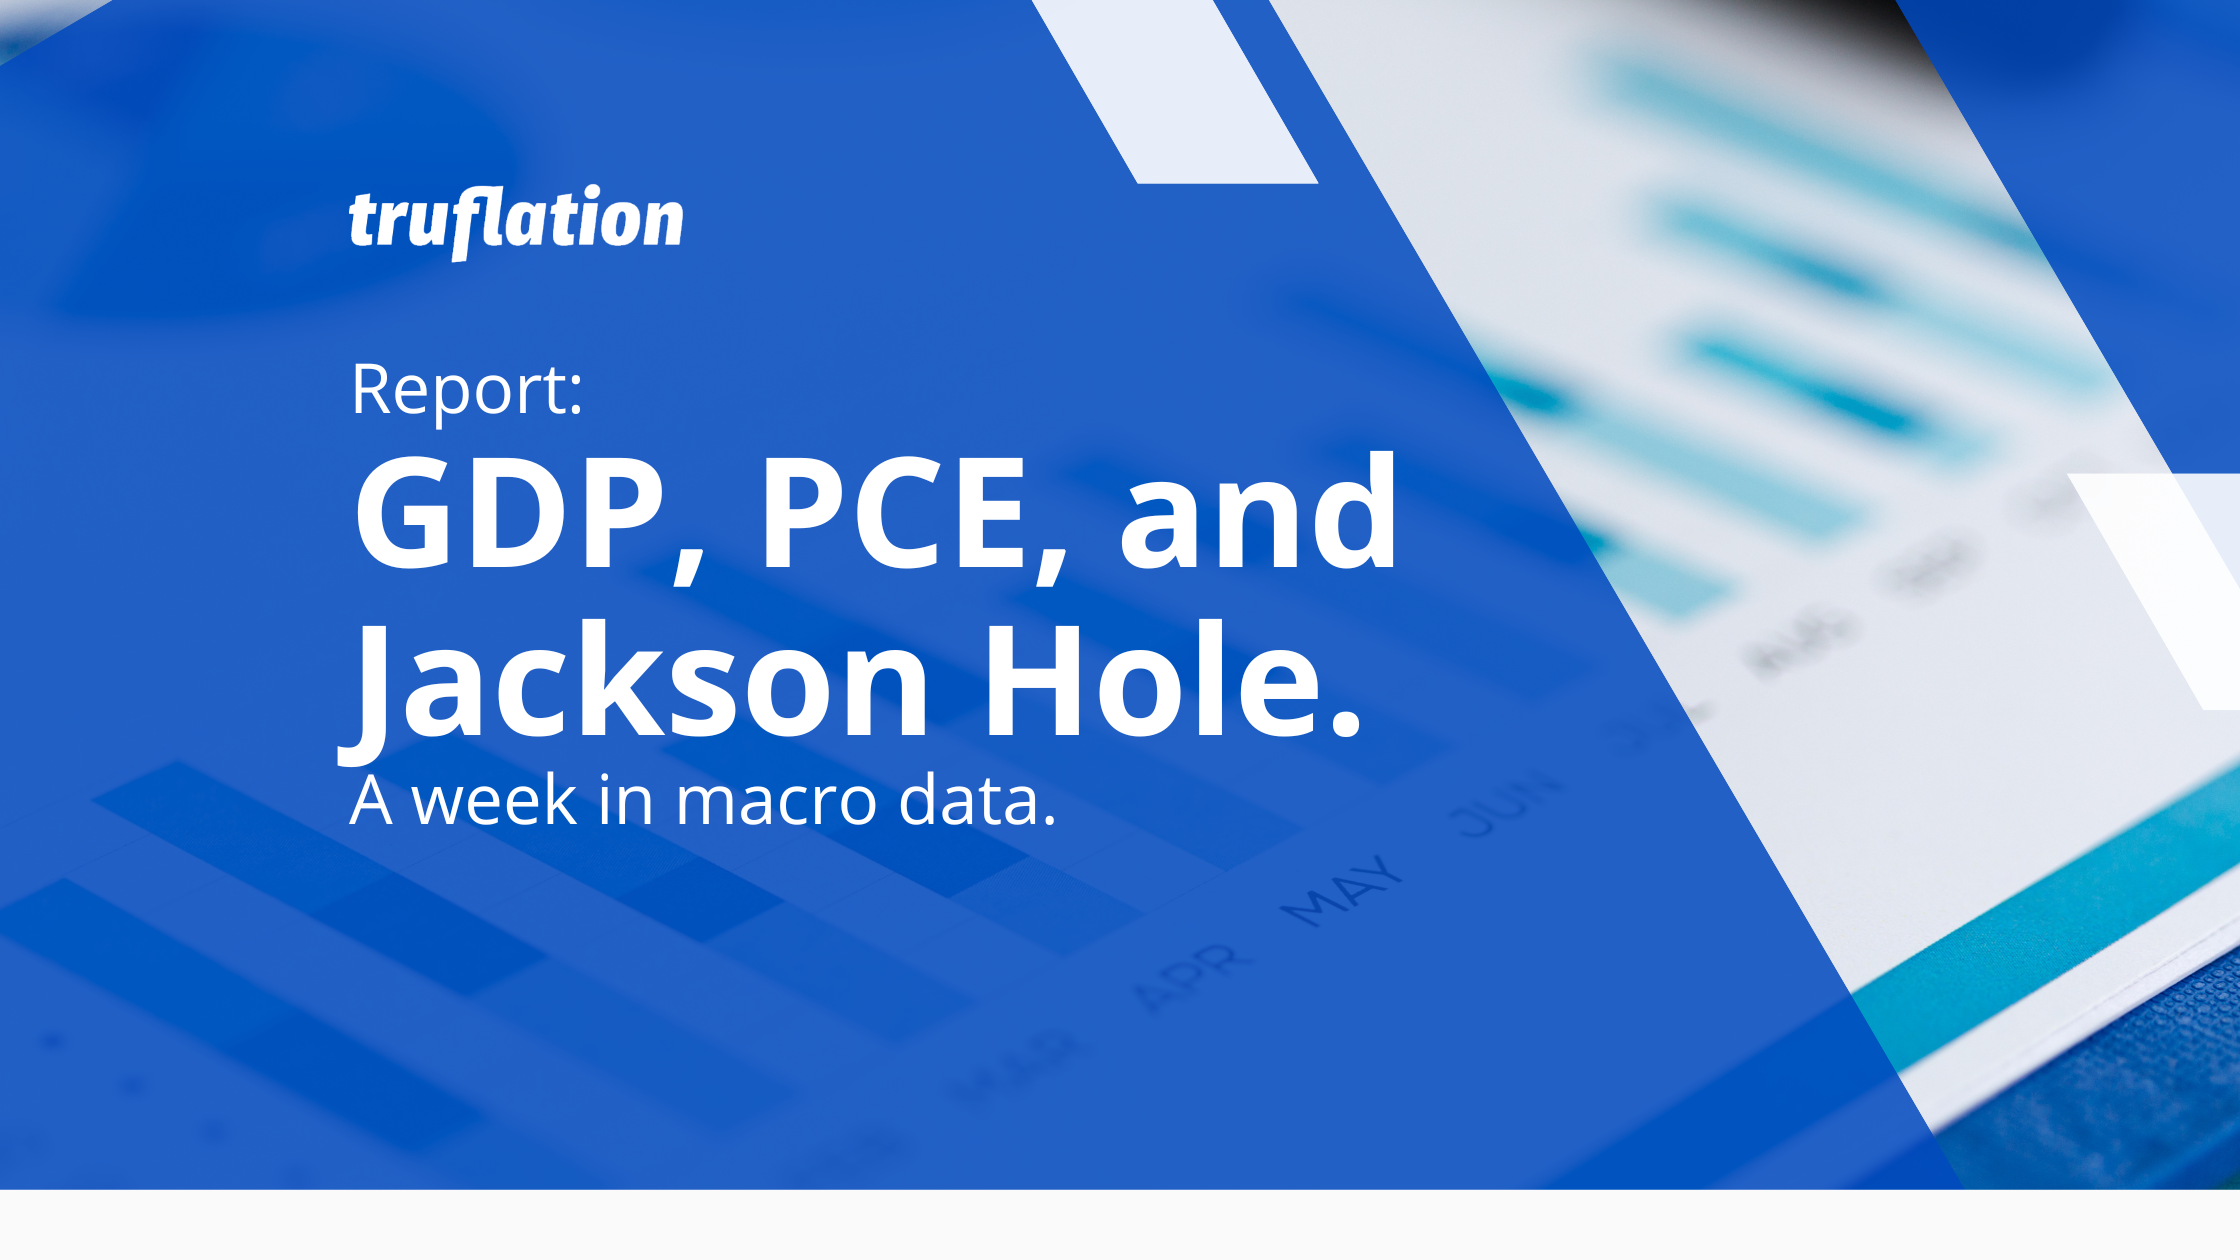 GDP, PCE, and Jackson Hole.